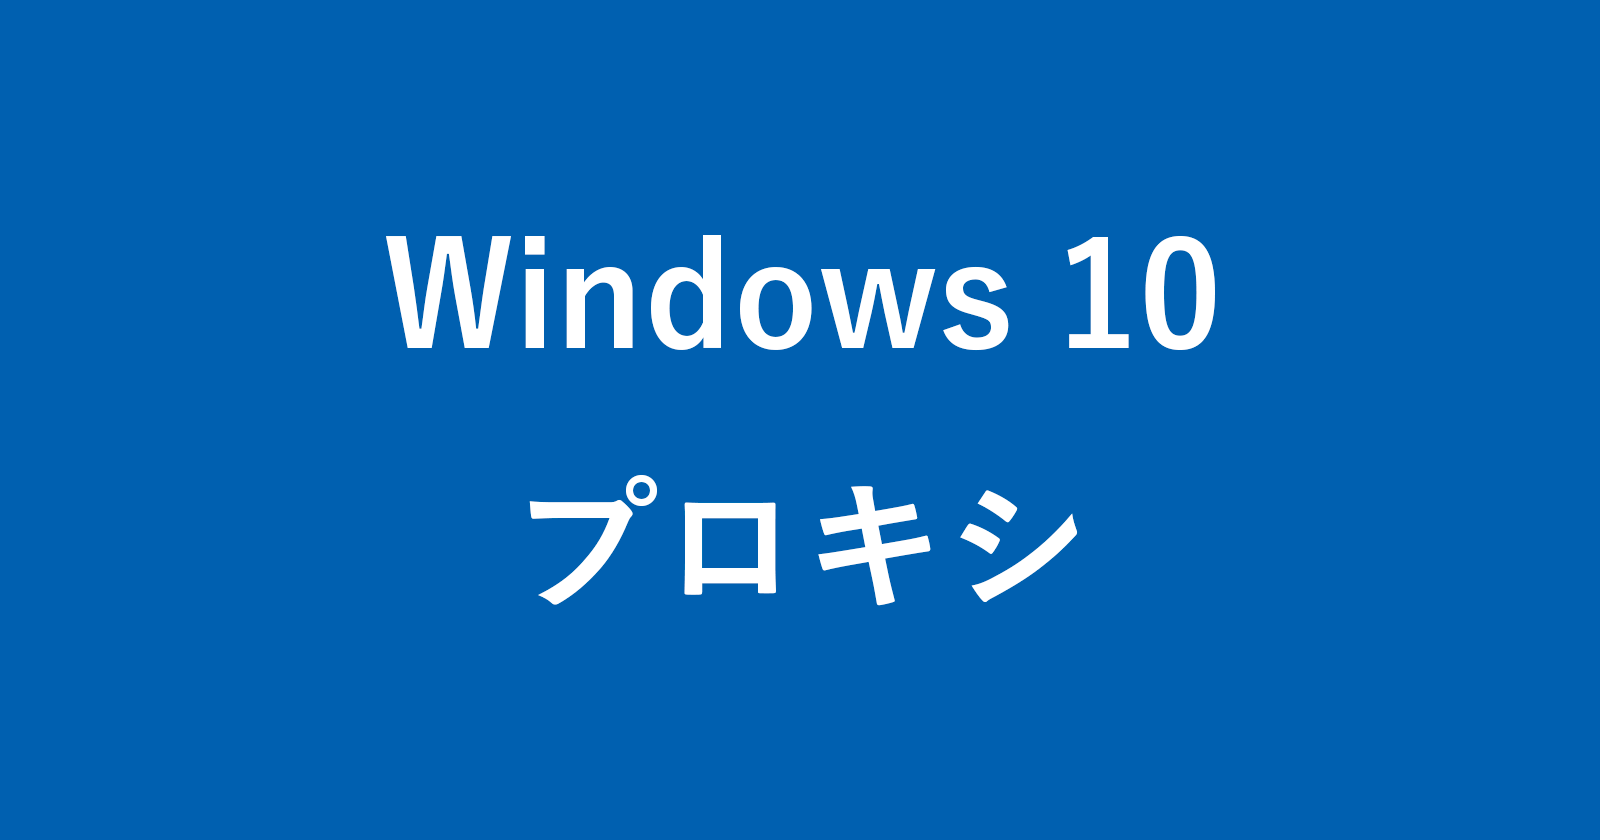 windows 10 proxy